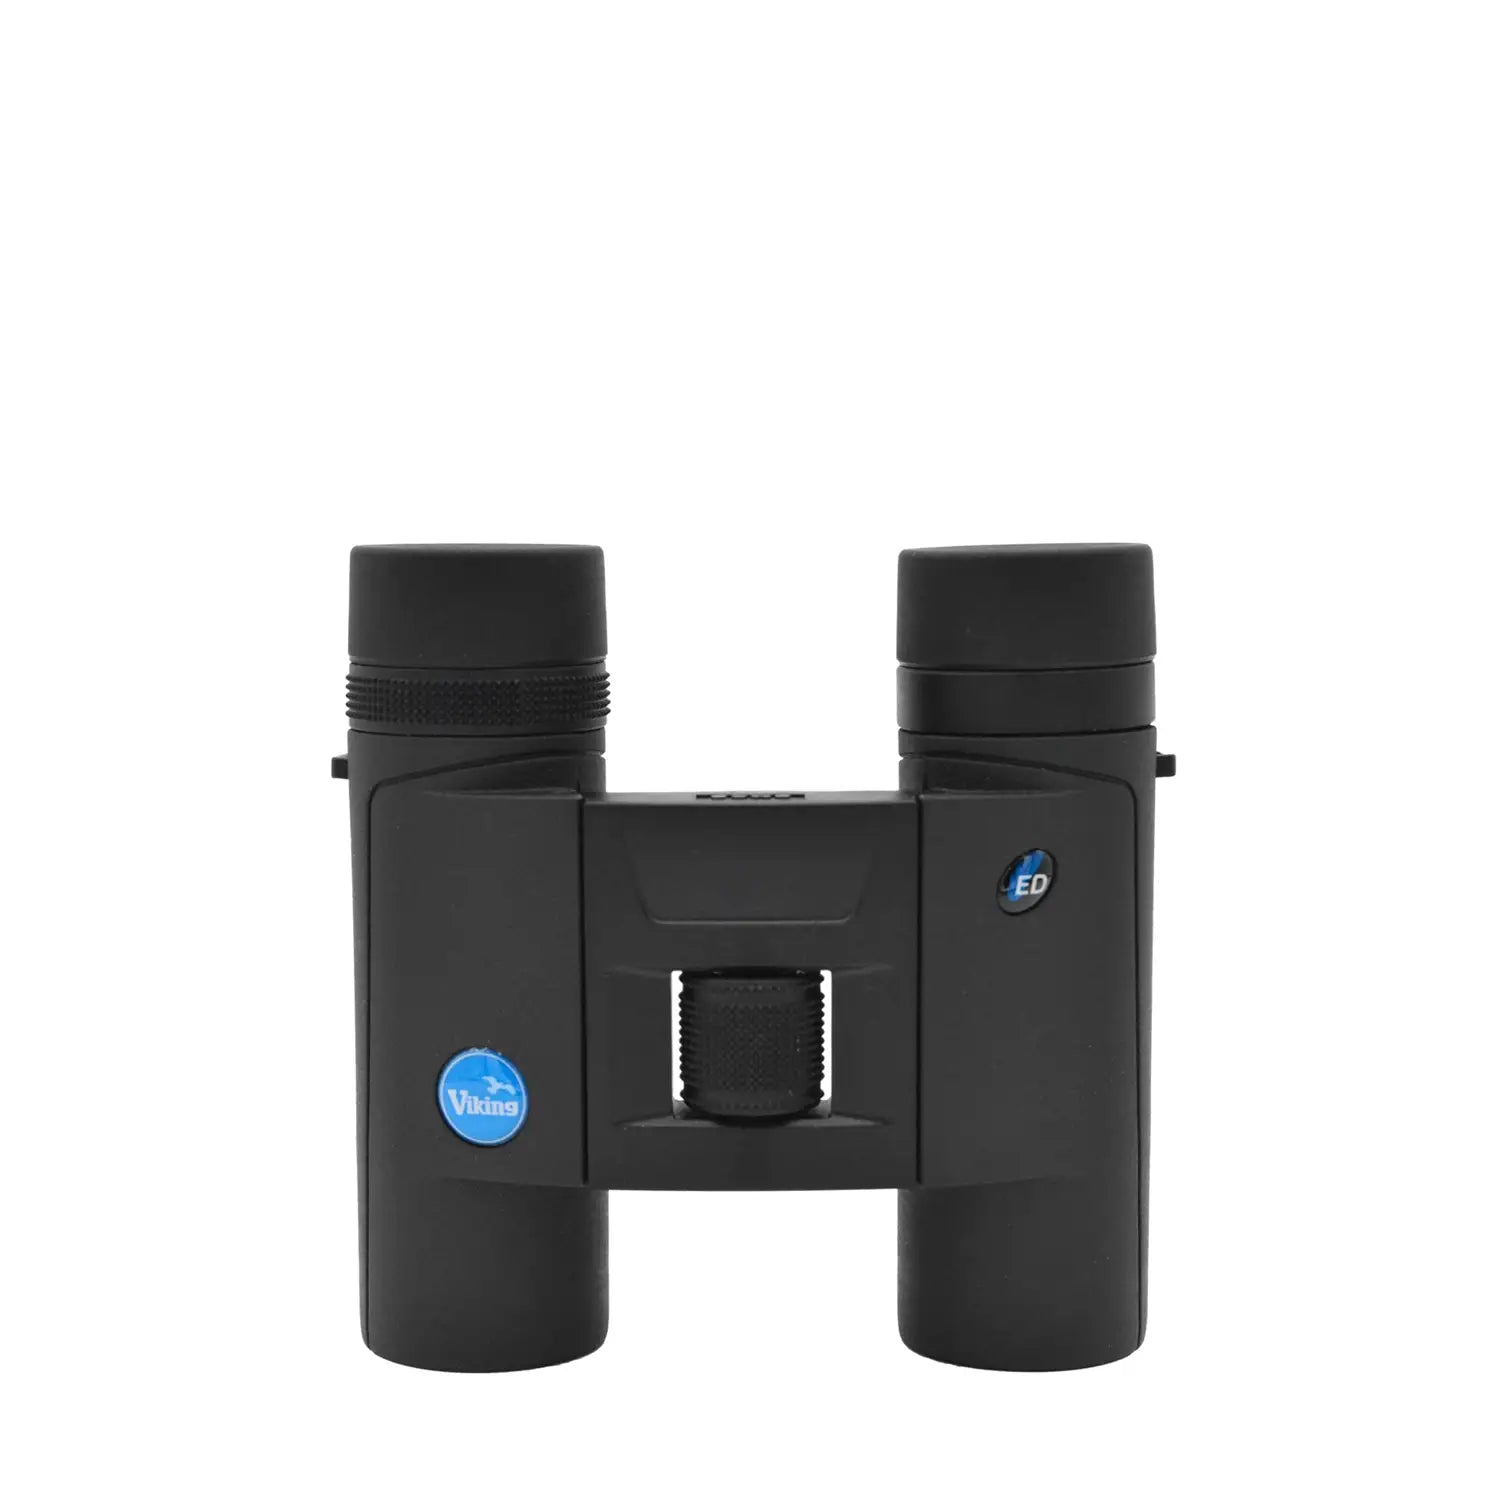 Kestrel Compact Binocular - 10x25